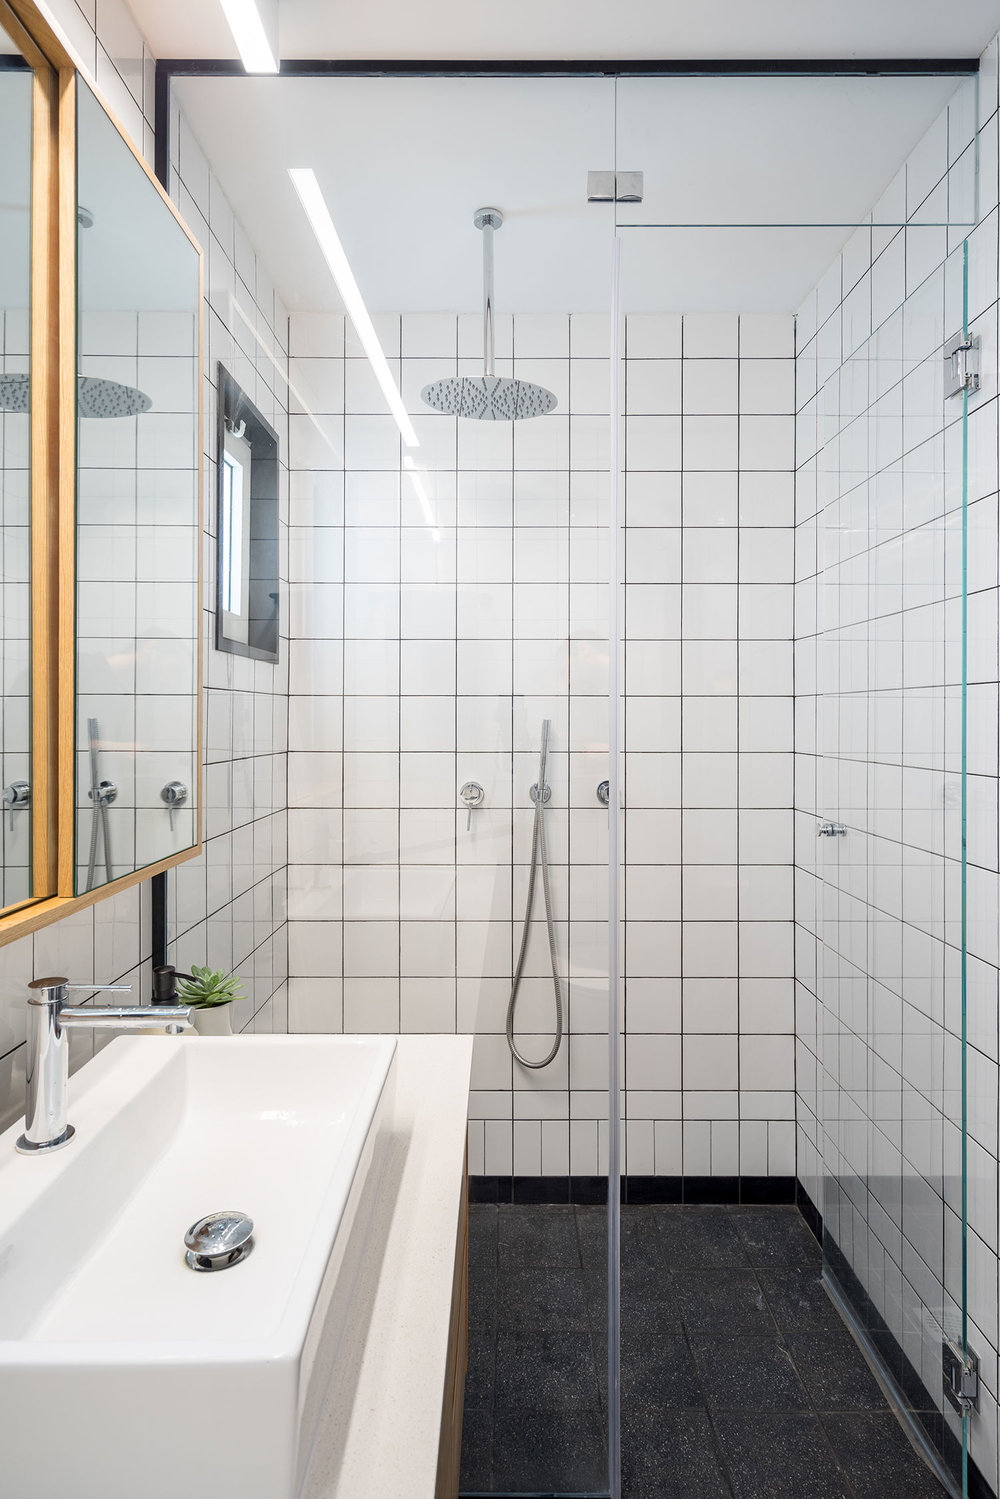 Kleine badkamer slim ontwerp - Badkamers voorbeelden